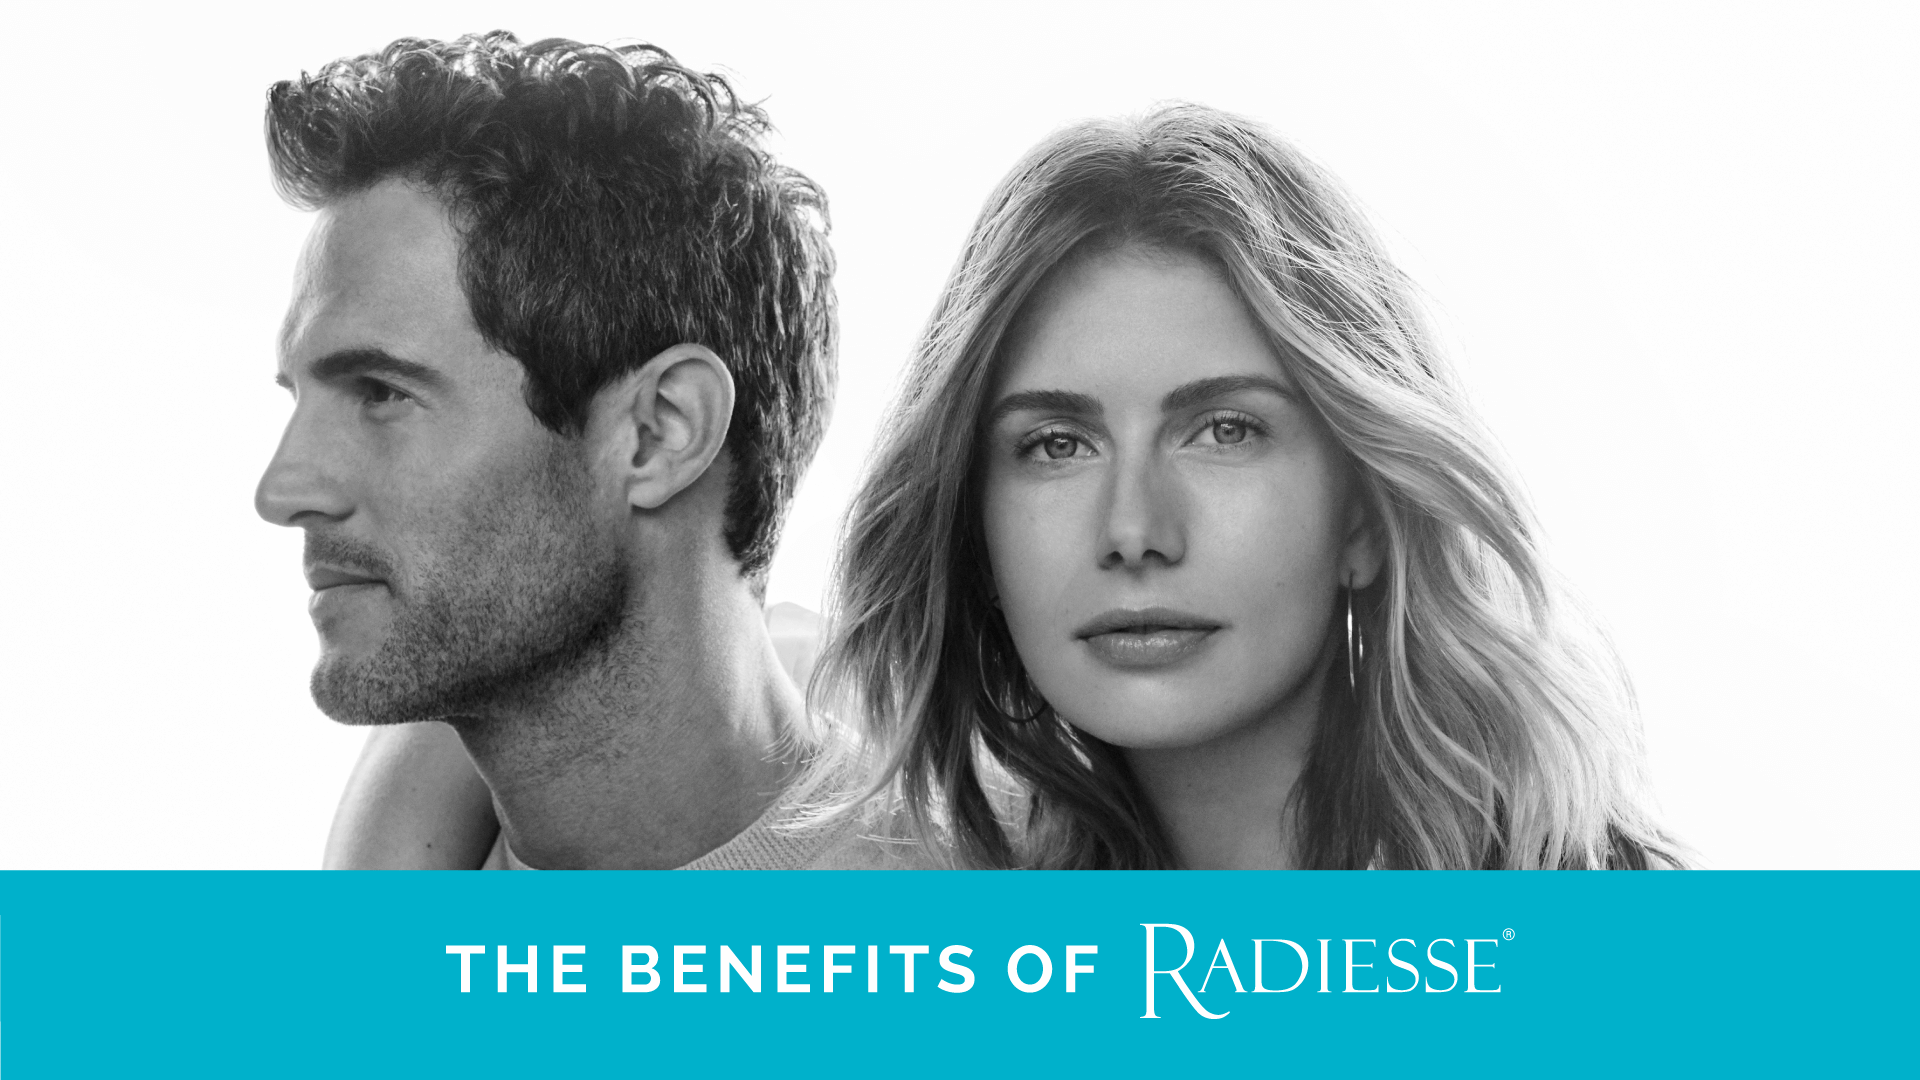 The benefits of Radiesse